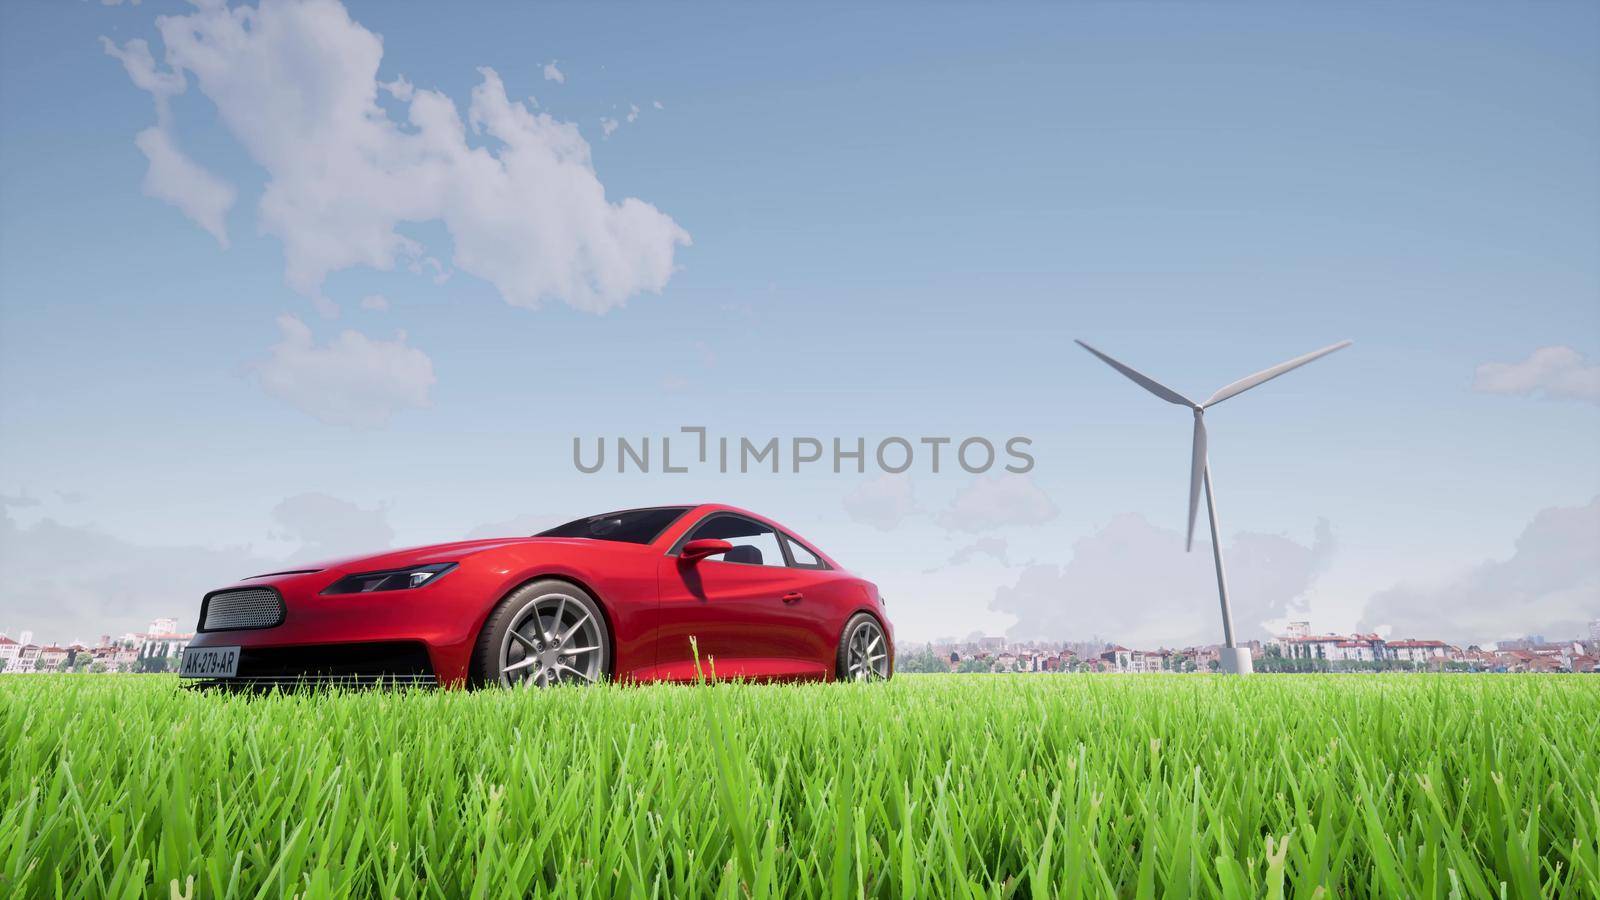 Wind generators machine red car green grass field eco landscape 3d render